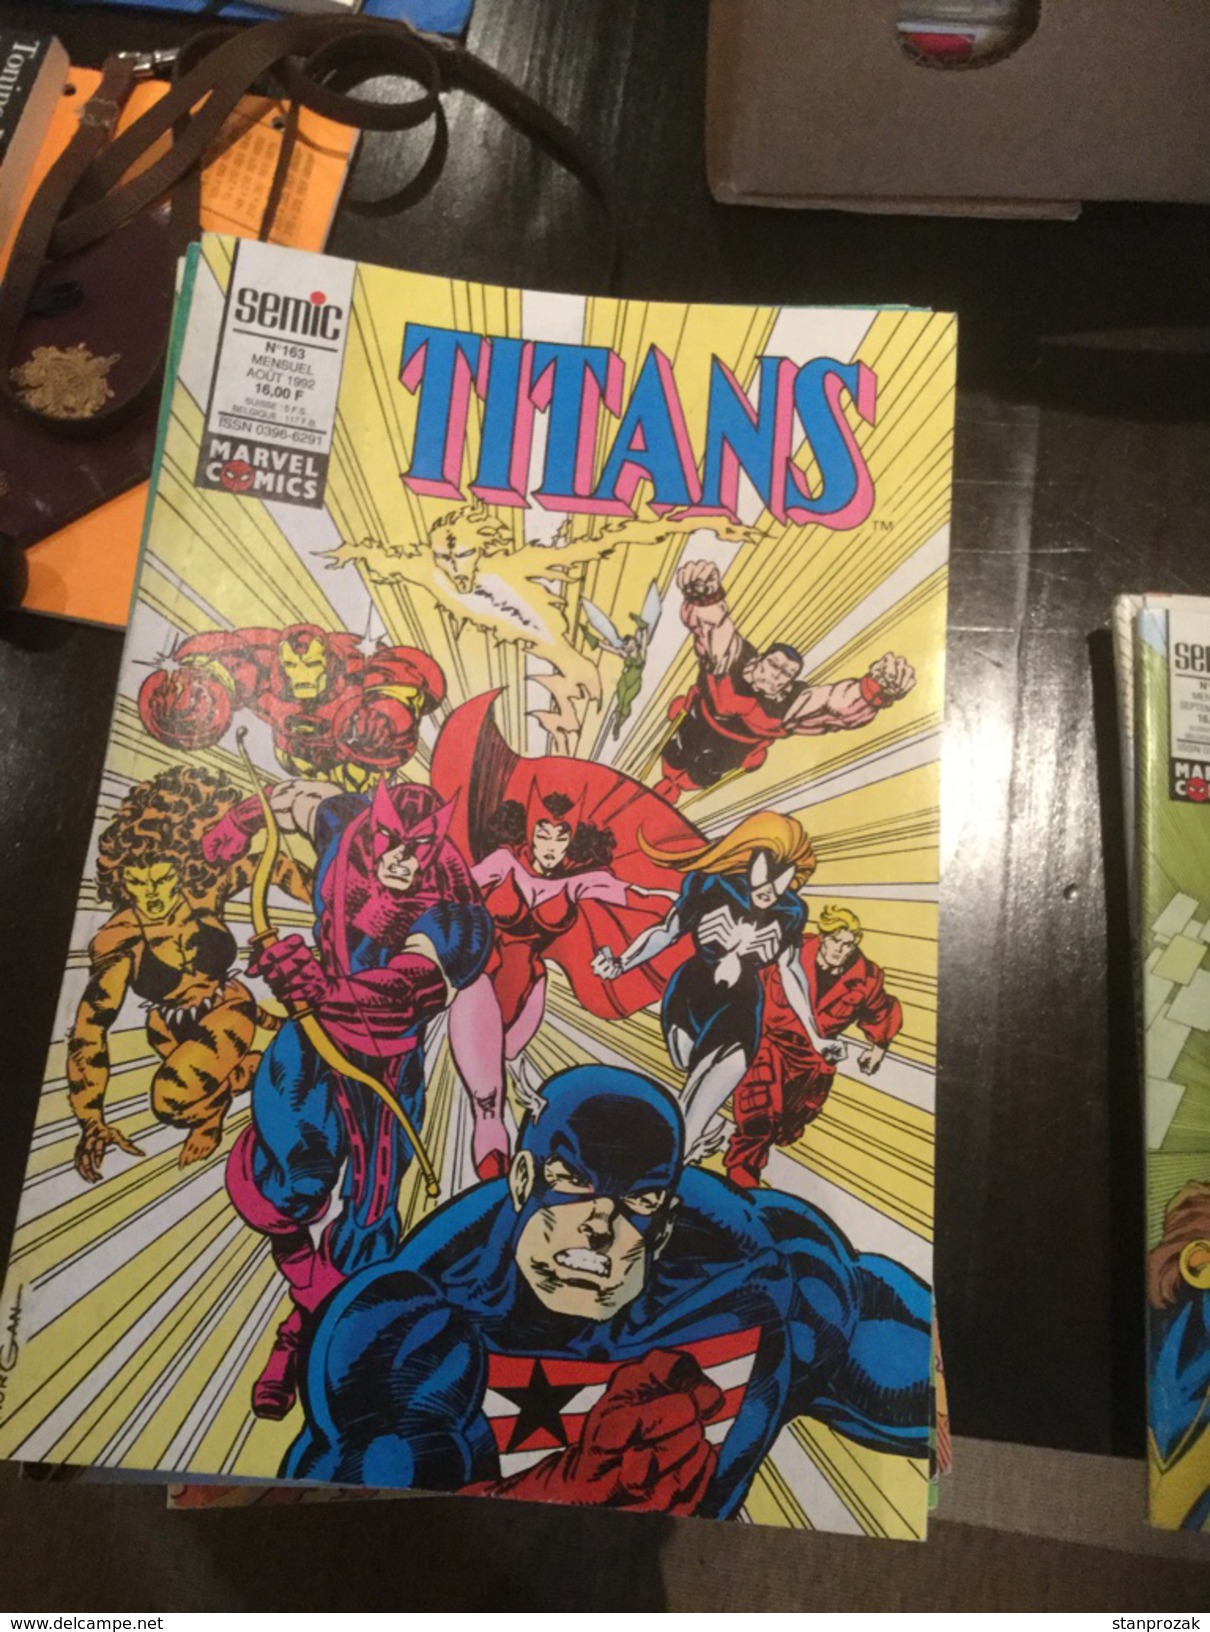 Titans 163 - Titans